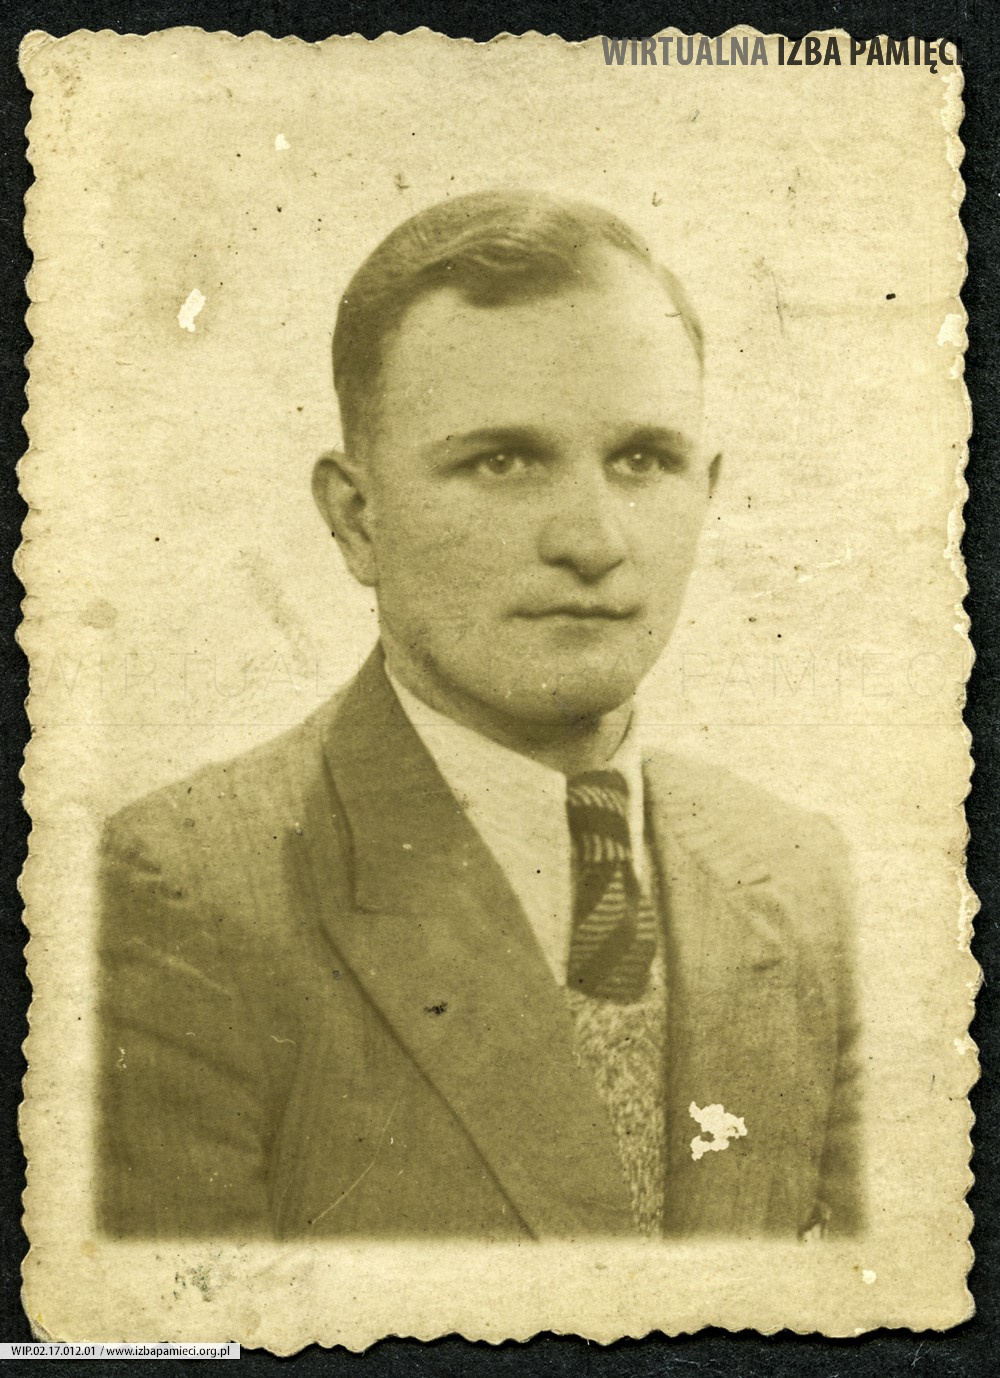 1937. Jan Ptaczek